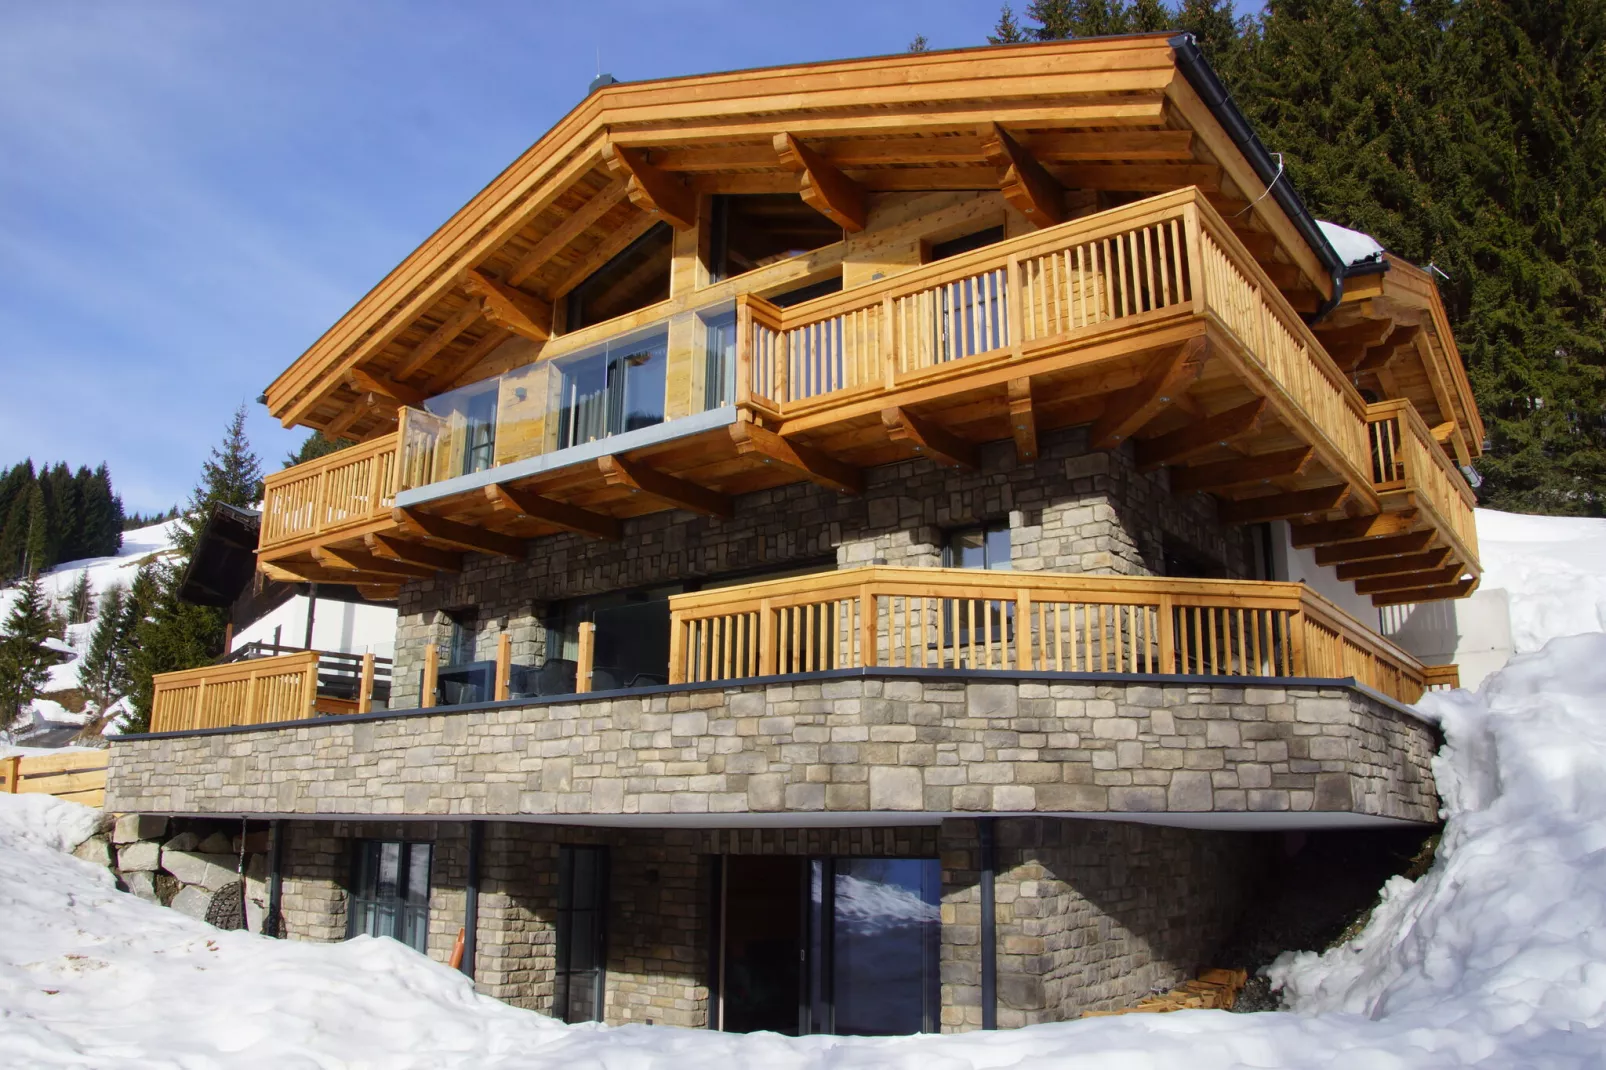 Chalet Glemmerl Mountain Lodge-Exterieur winter